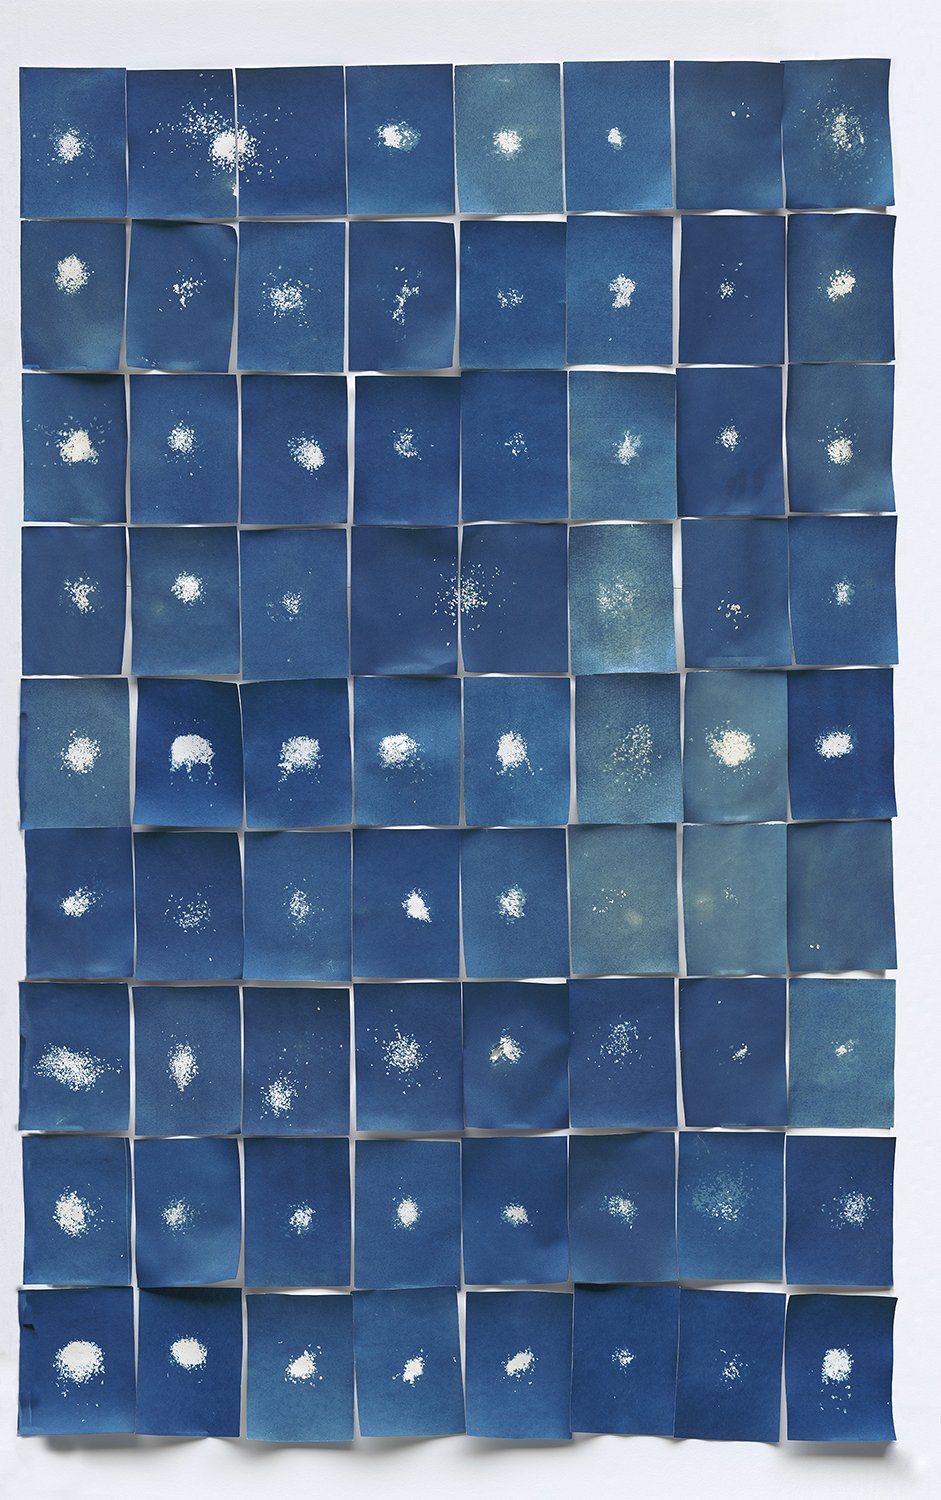 Epidermis I, mixed media, 160 x 110 cm, 2018